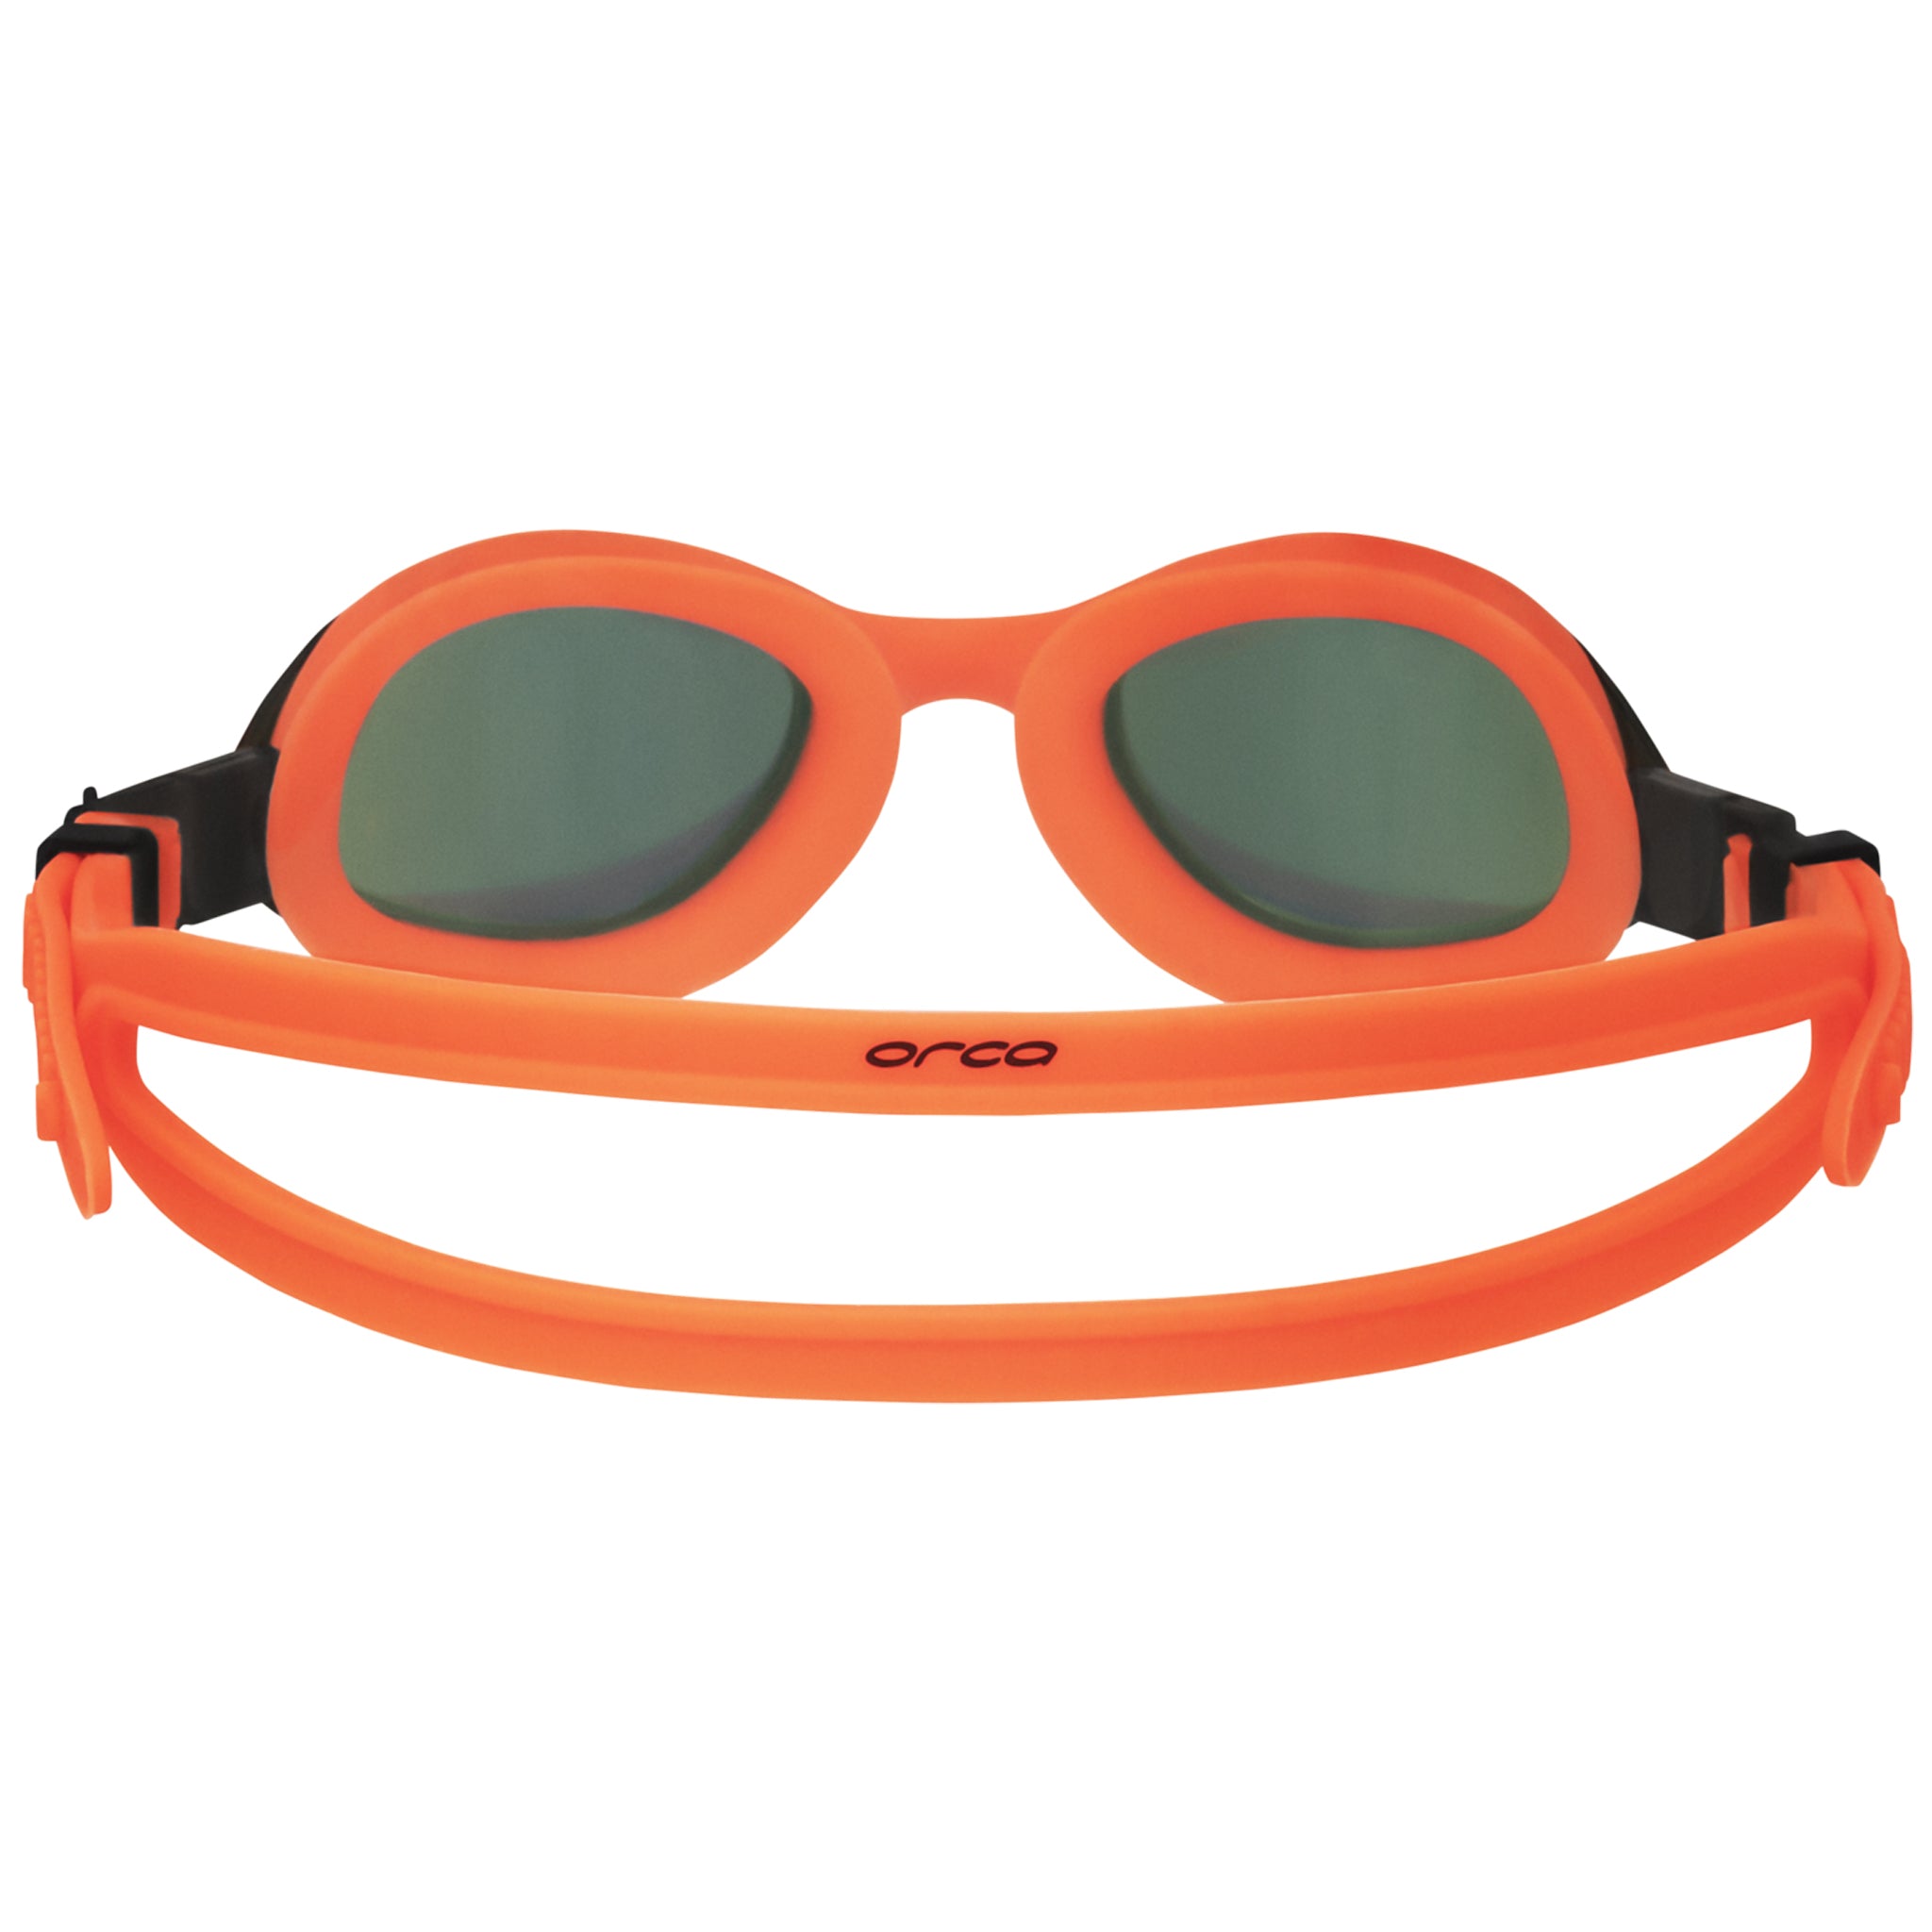 Orca Killa 180 Swimming Goggles with Mirrored Lenses | Back